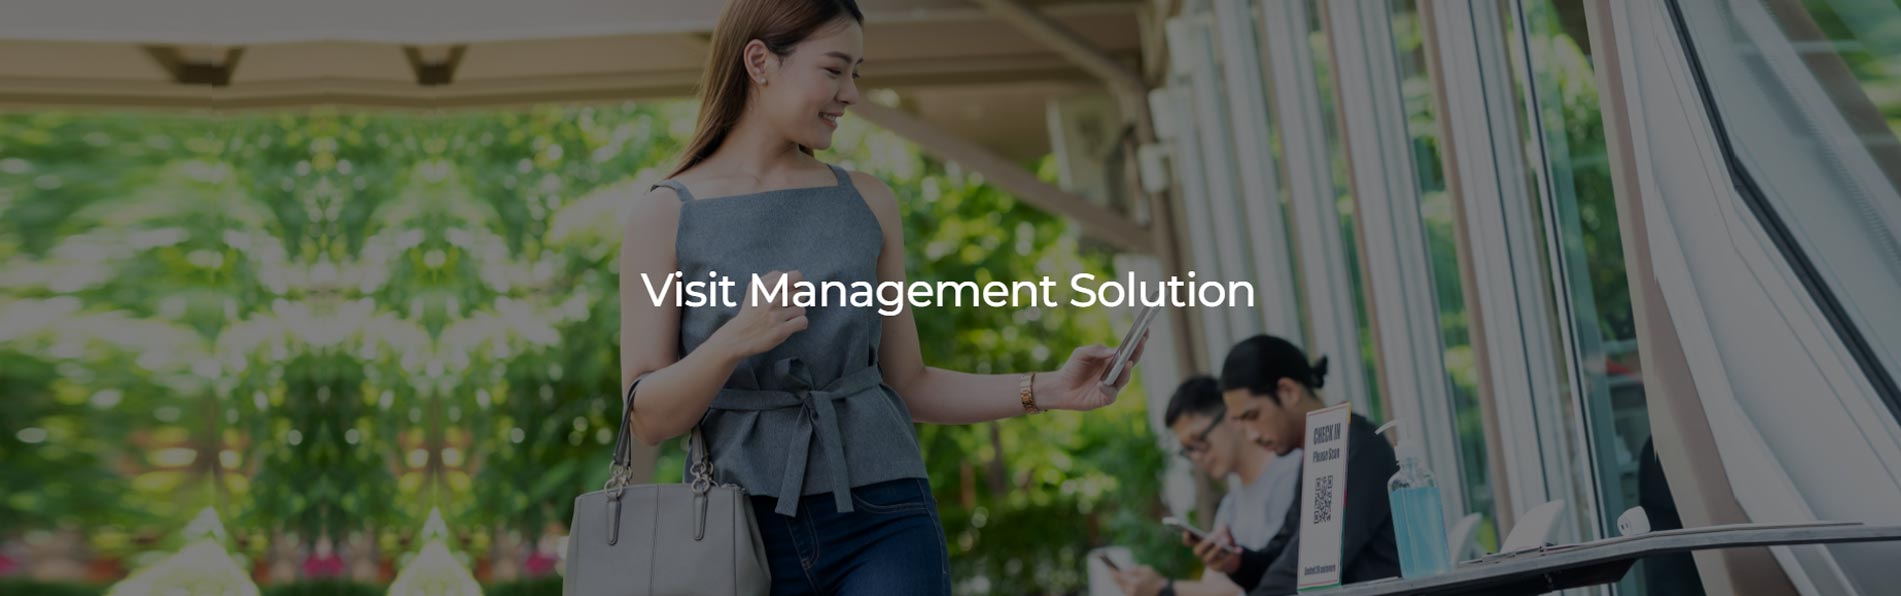 Visit Management Solution